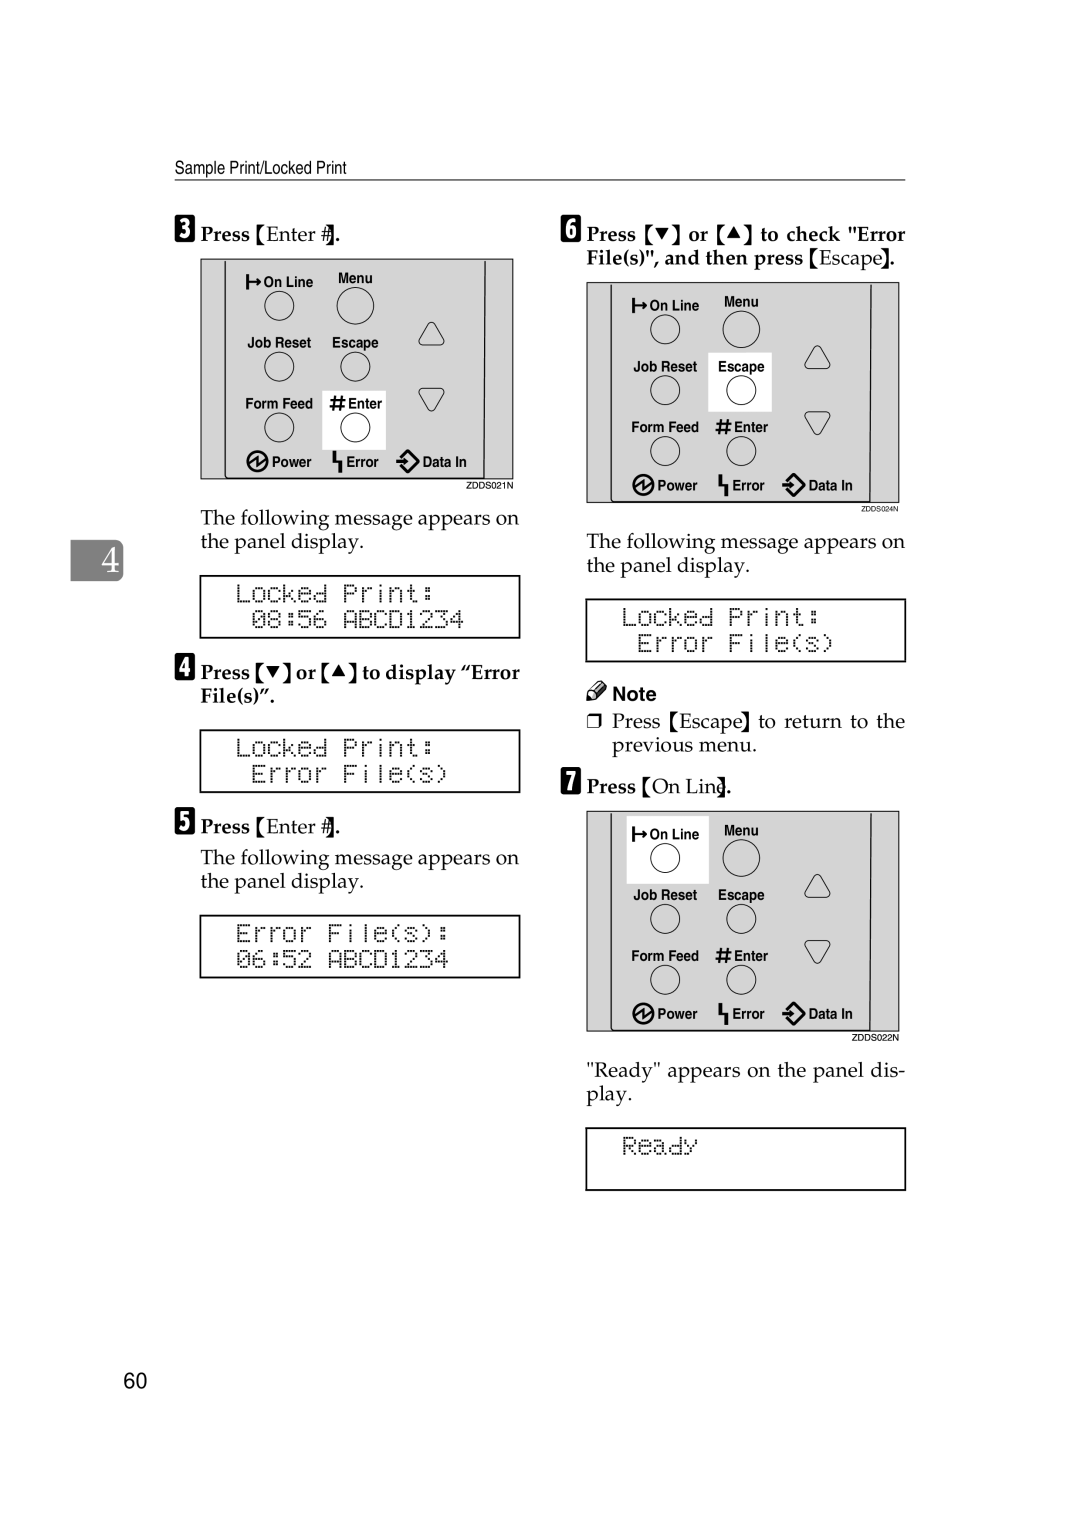 Lanier AP2610 manual Locked Print Error Files, Press T or U to display Error Files 